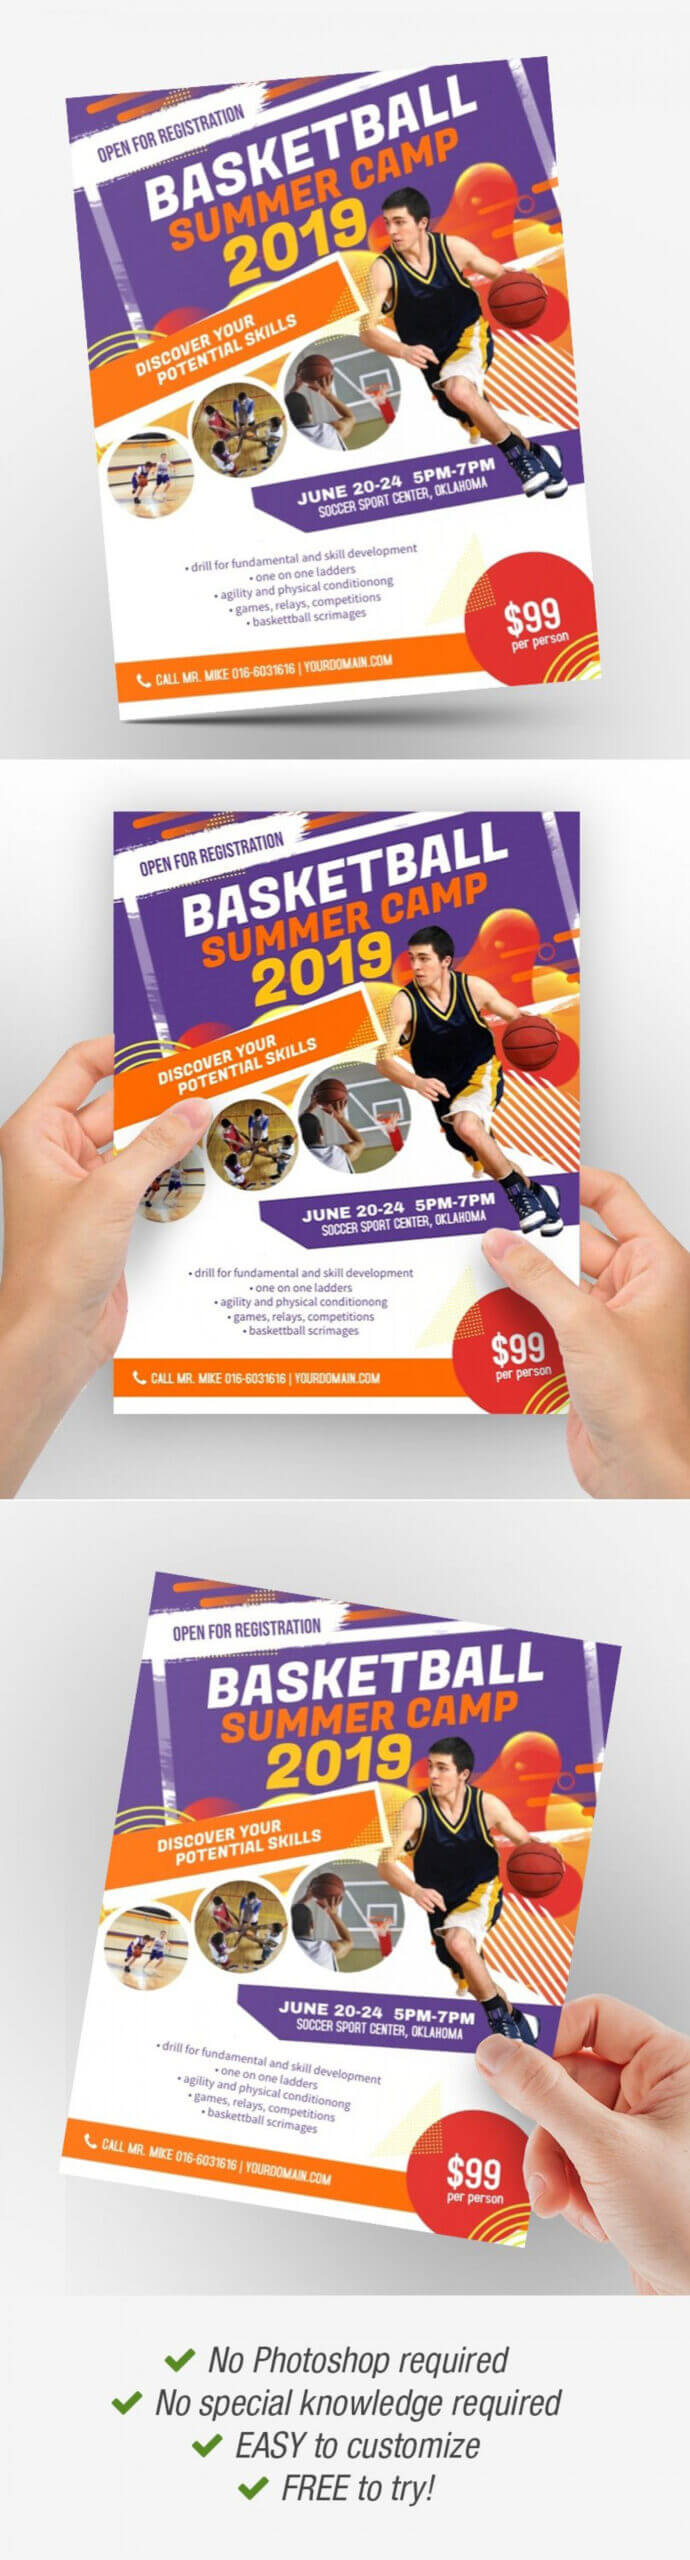 Basketball Camp Brochure Template Regarding Basketball Camp Brochure Template